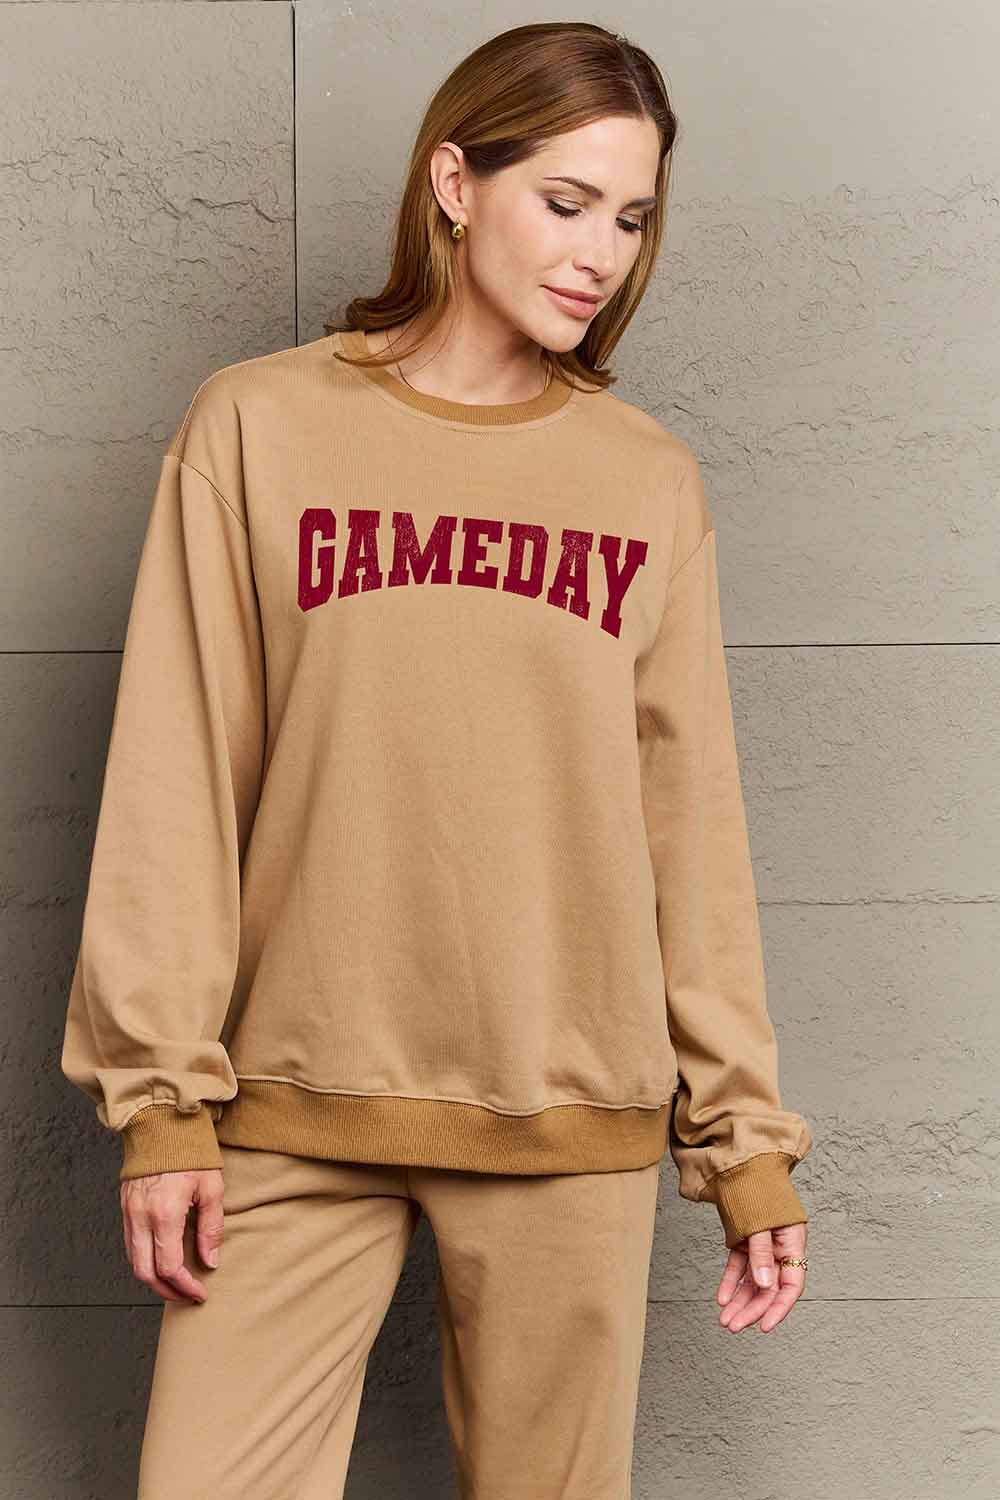 GAMEDAY Graphic Sweatshirt